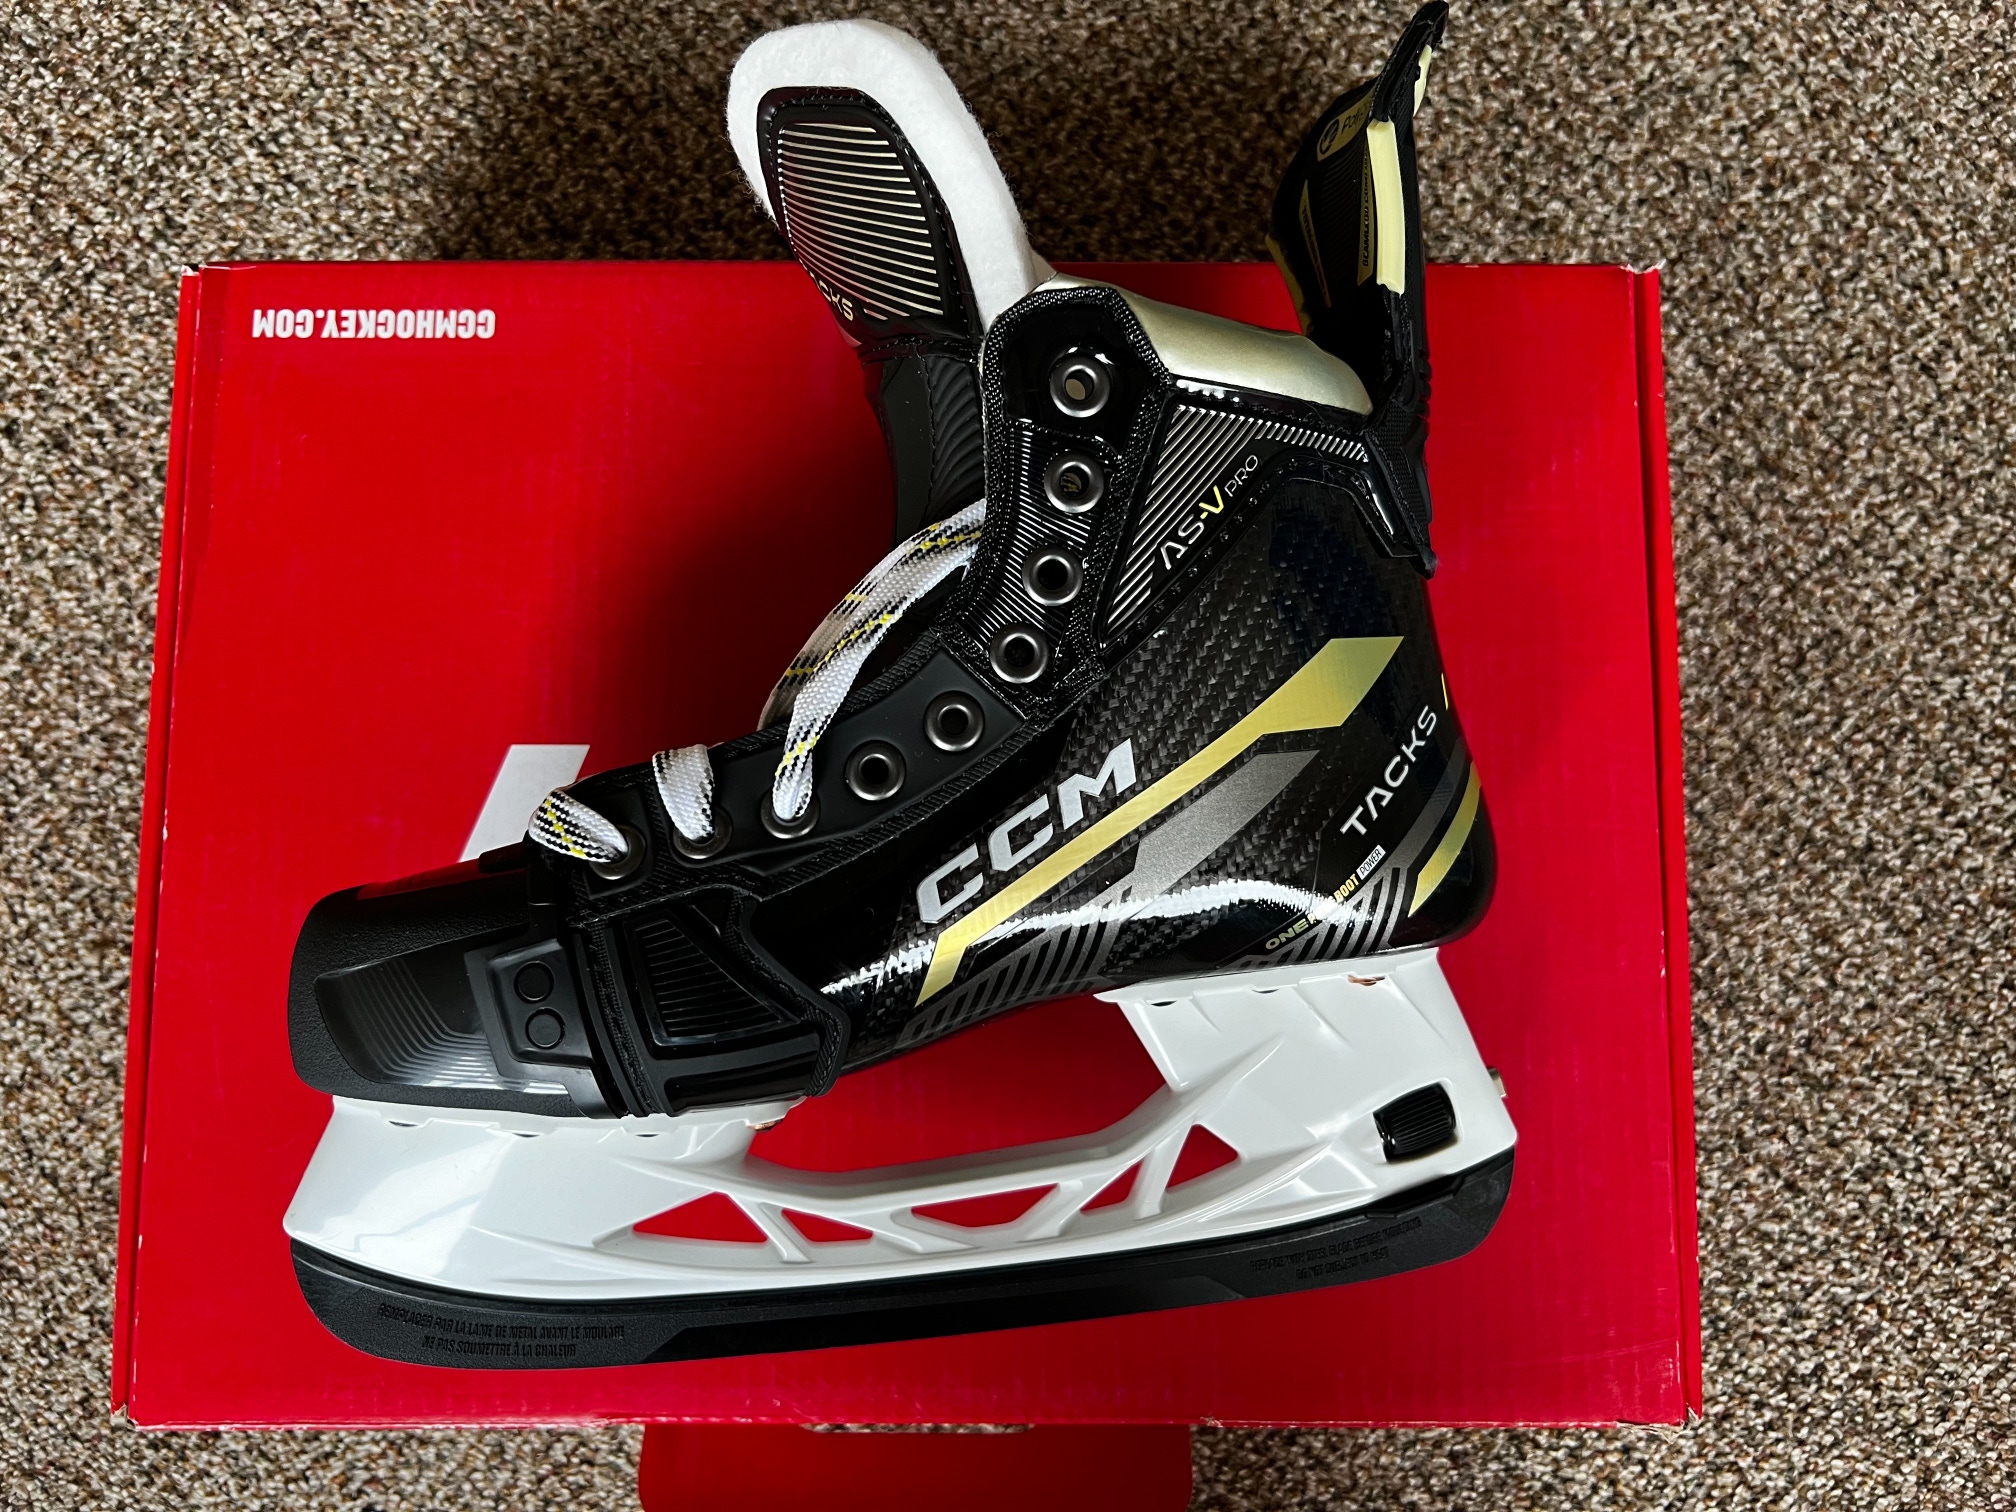 Intermediate New CCM AS-V Pro Hockey Skates Regular Width Size 5.5